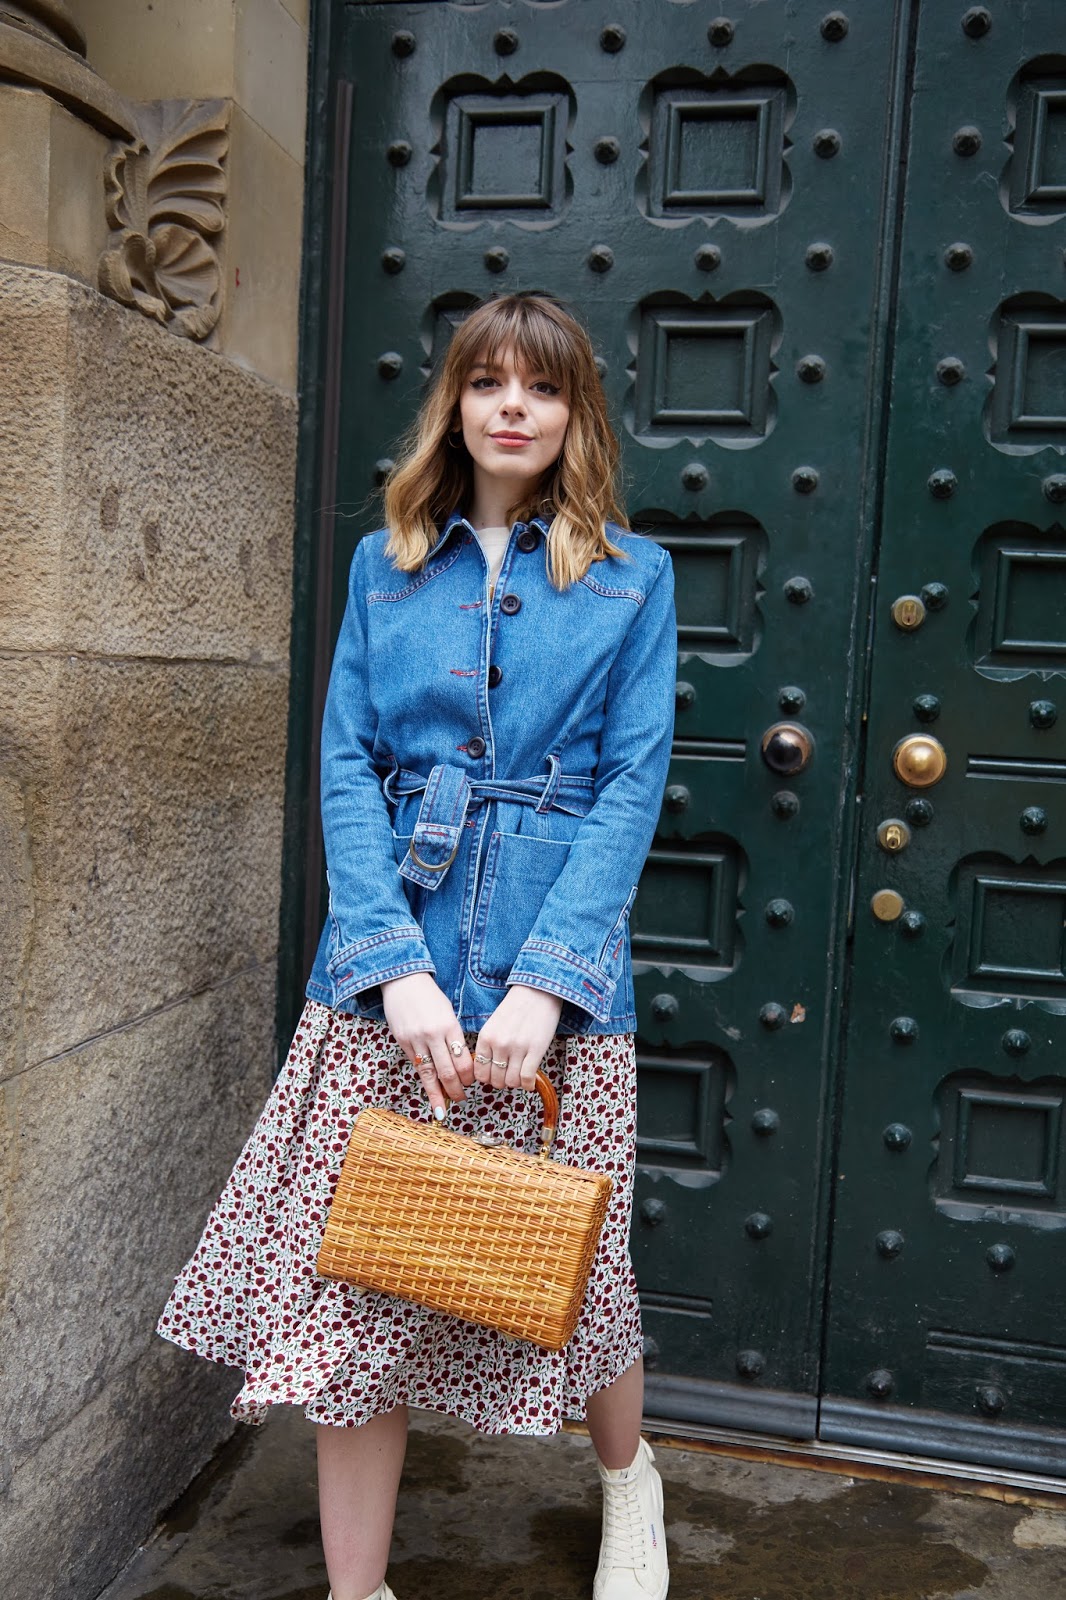 Sophia Rosemary | Manchester Fashion and Lifestyle Blogger: Sweet